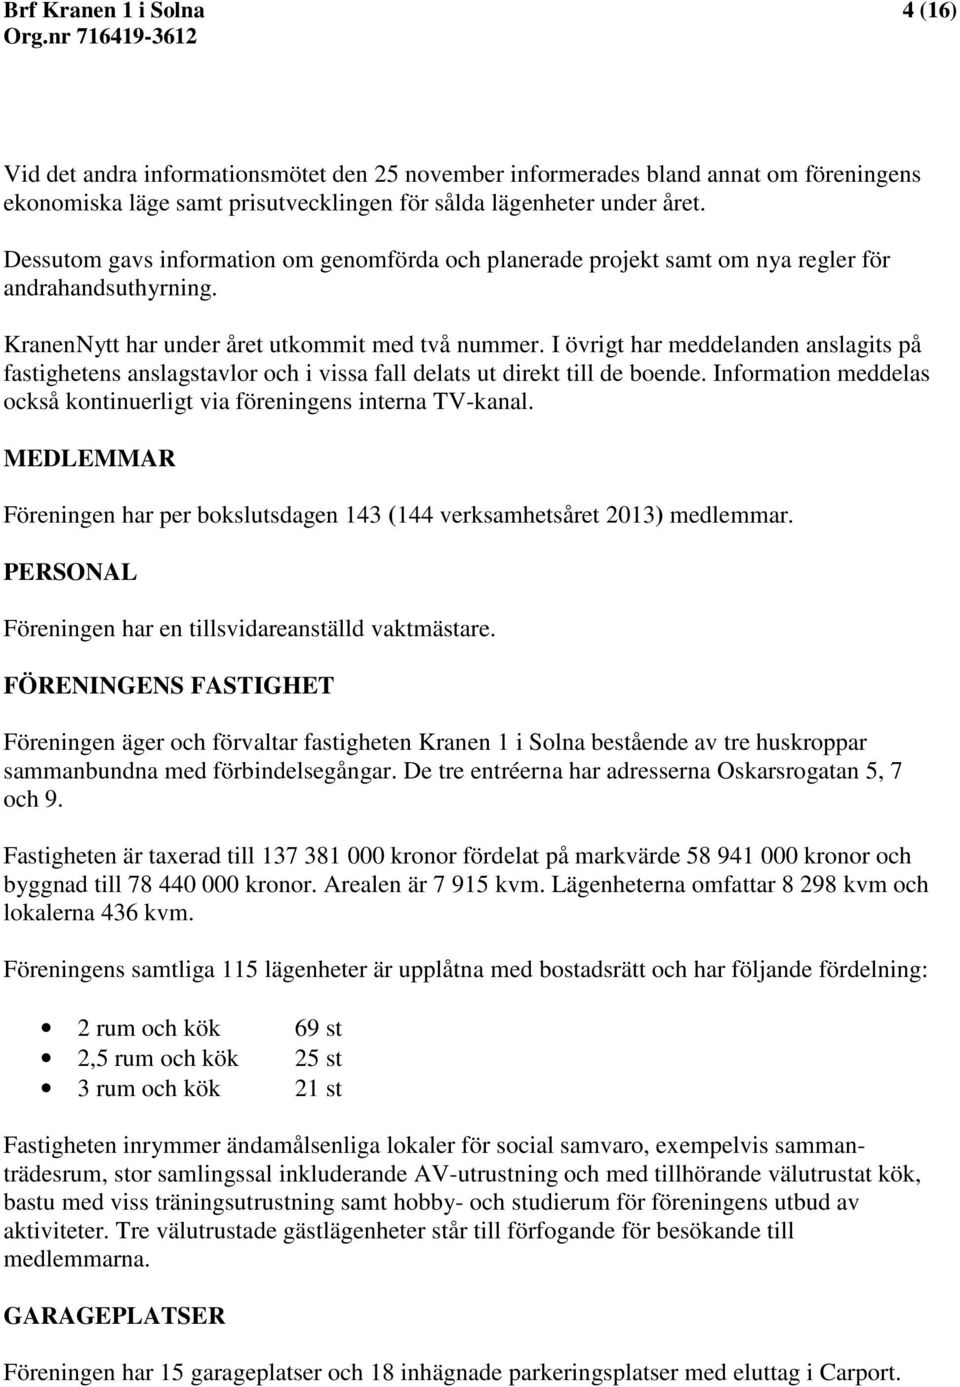 Brf Kranen 1 i Solna - PDF Free Download